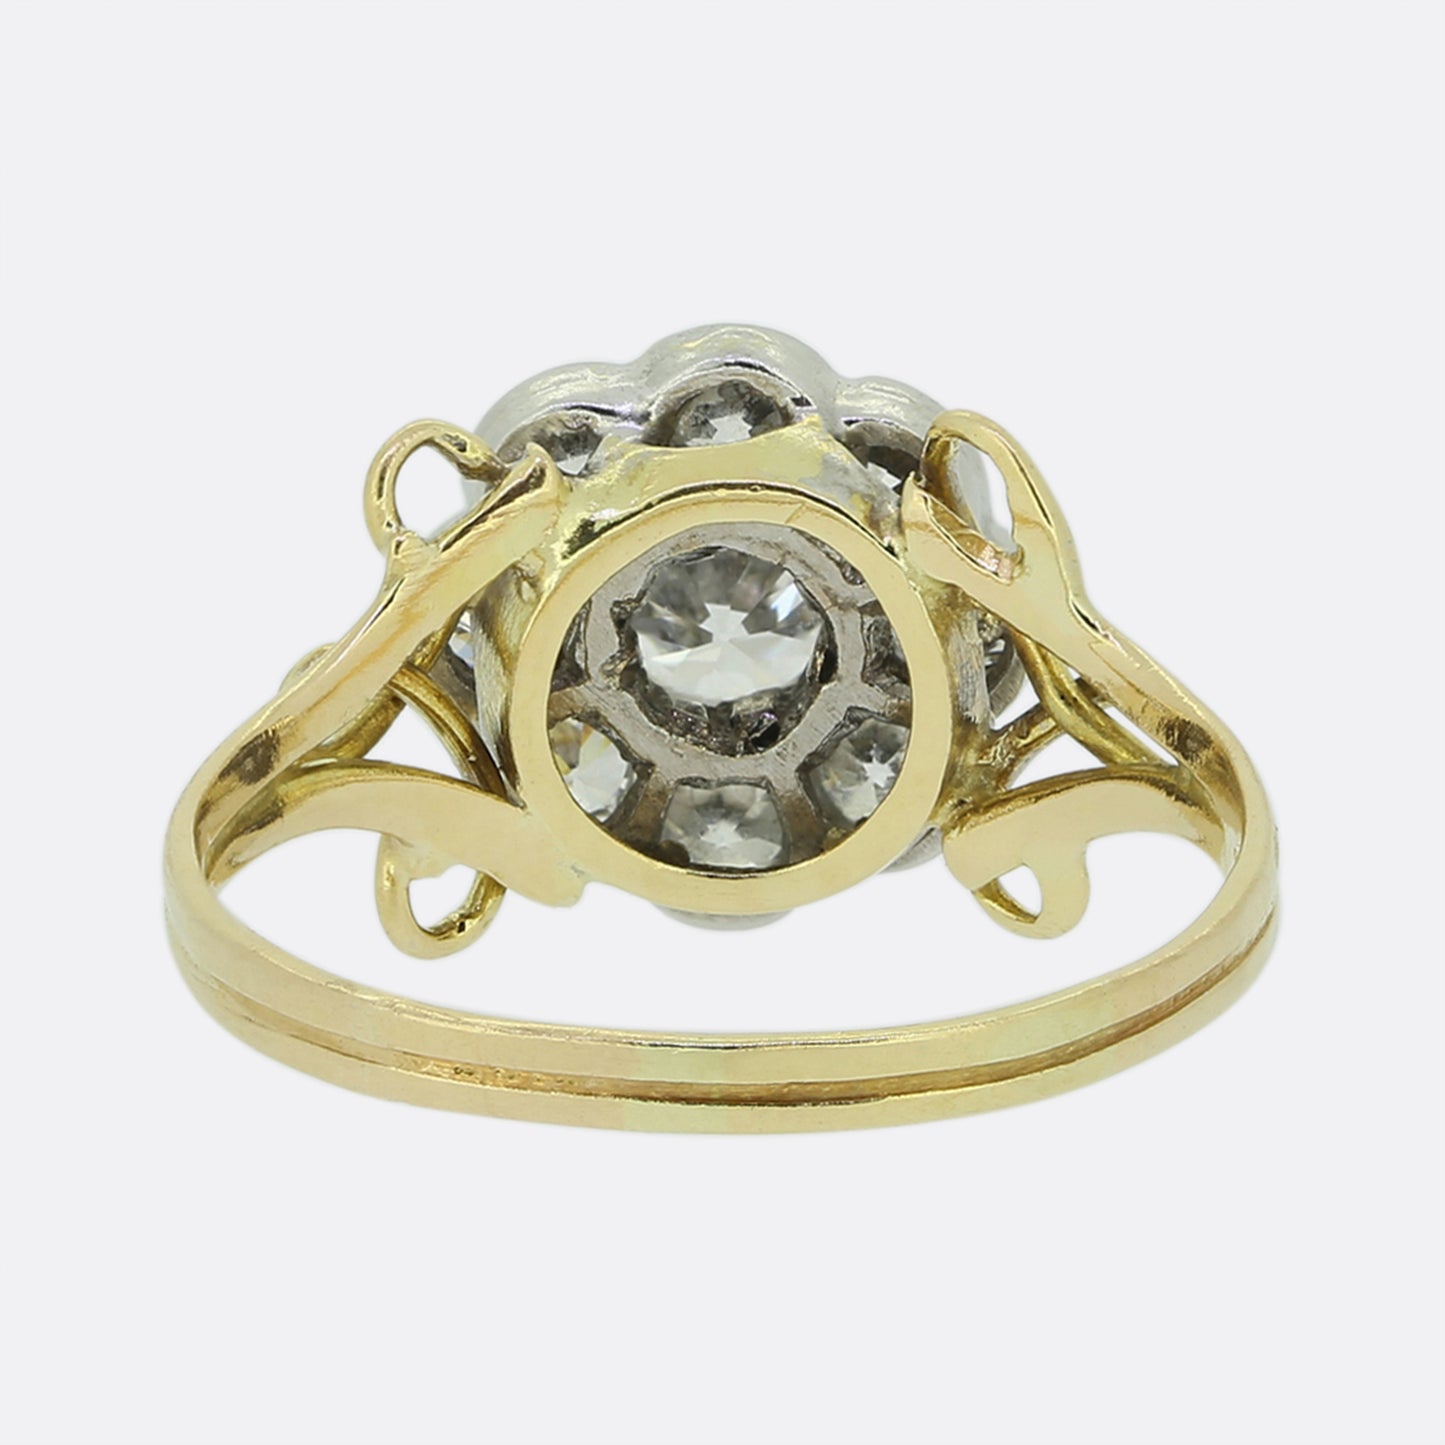 Victorian 0.70 Carat Old Cut Diamond Cluster Ring